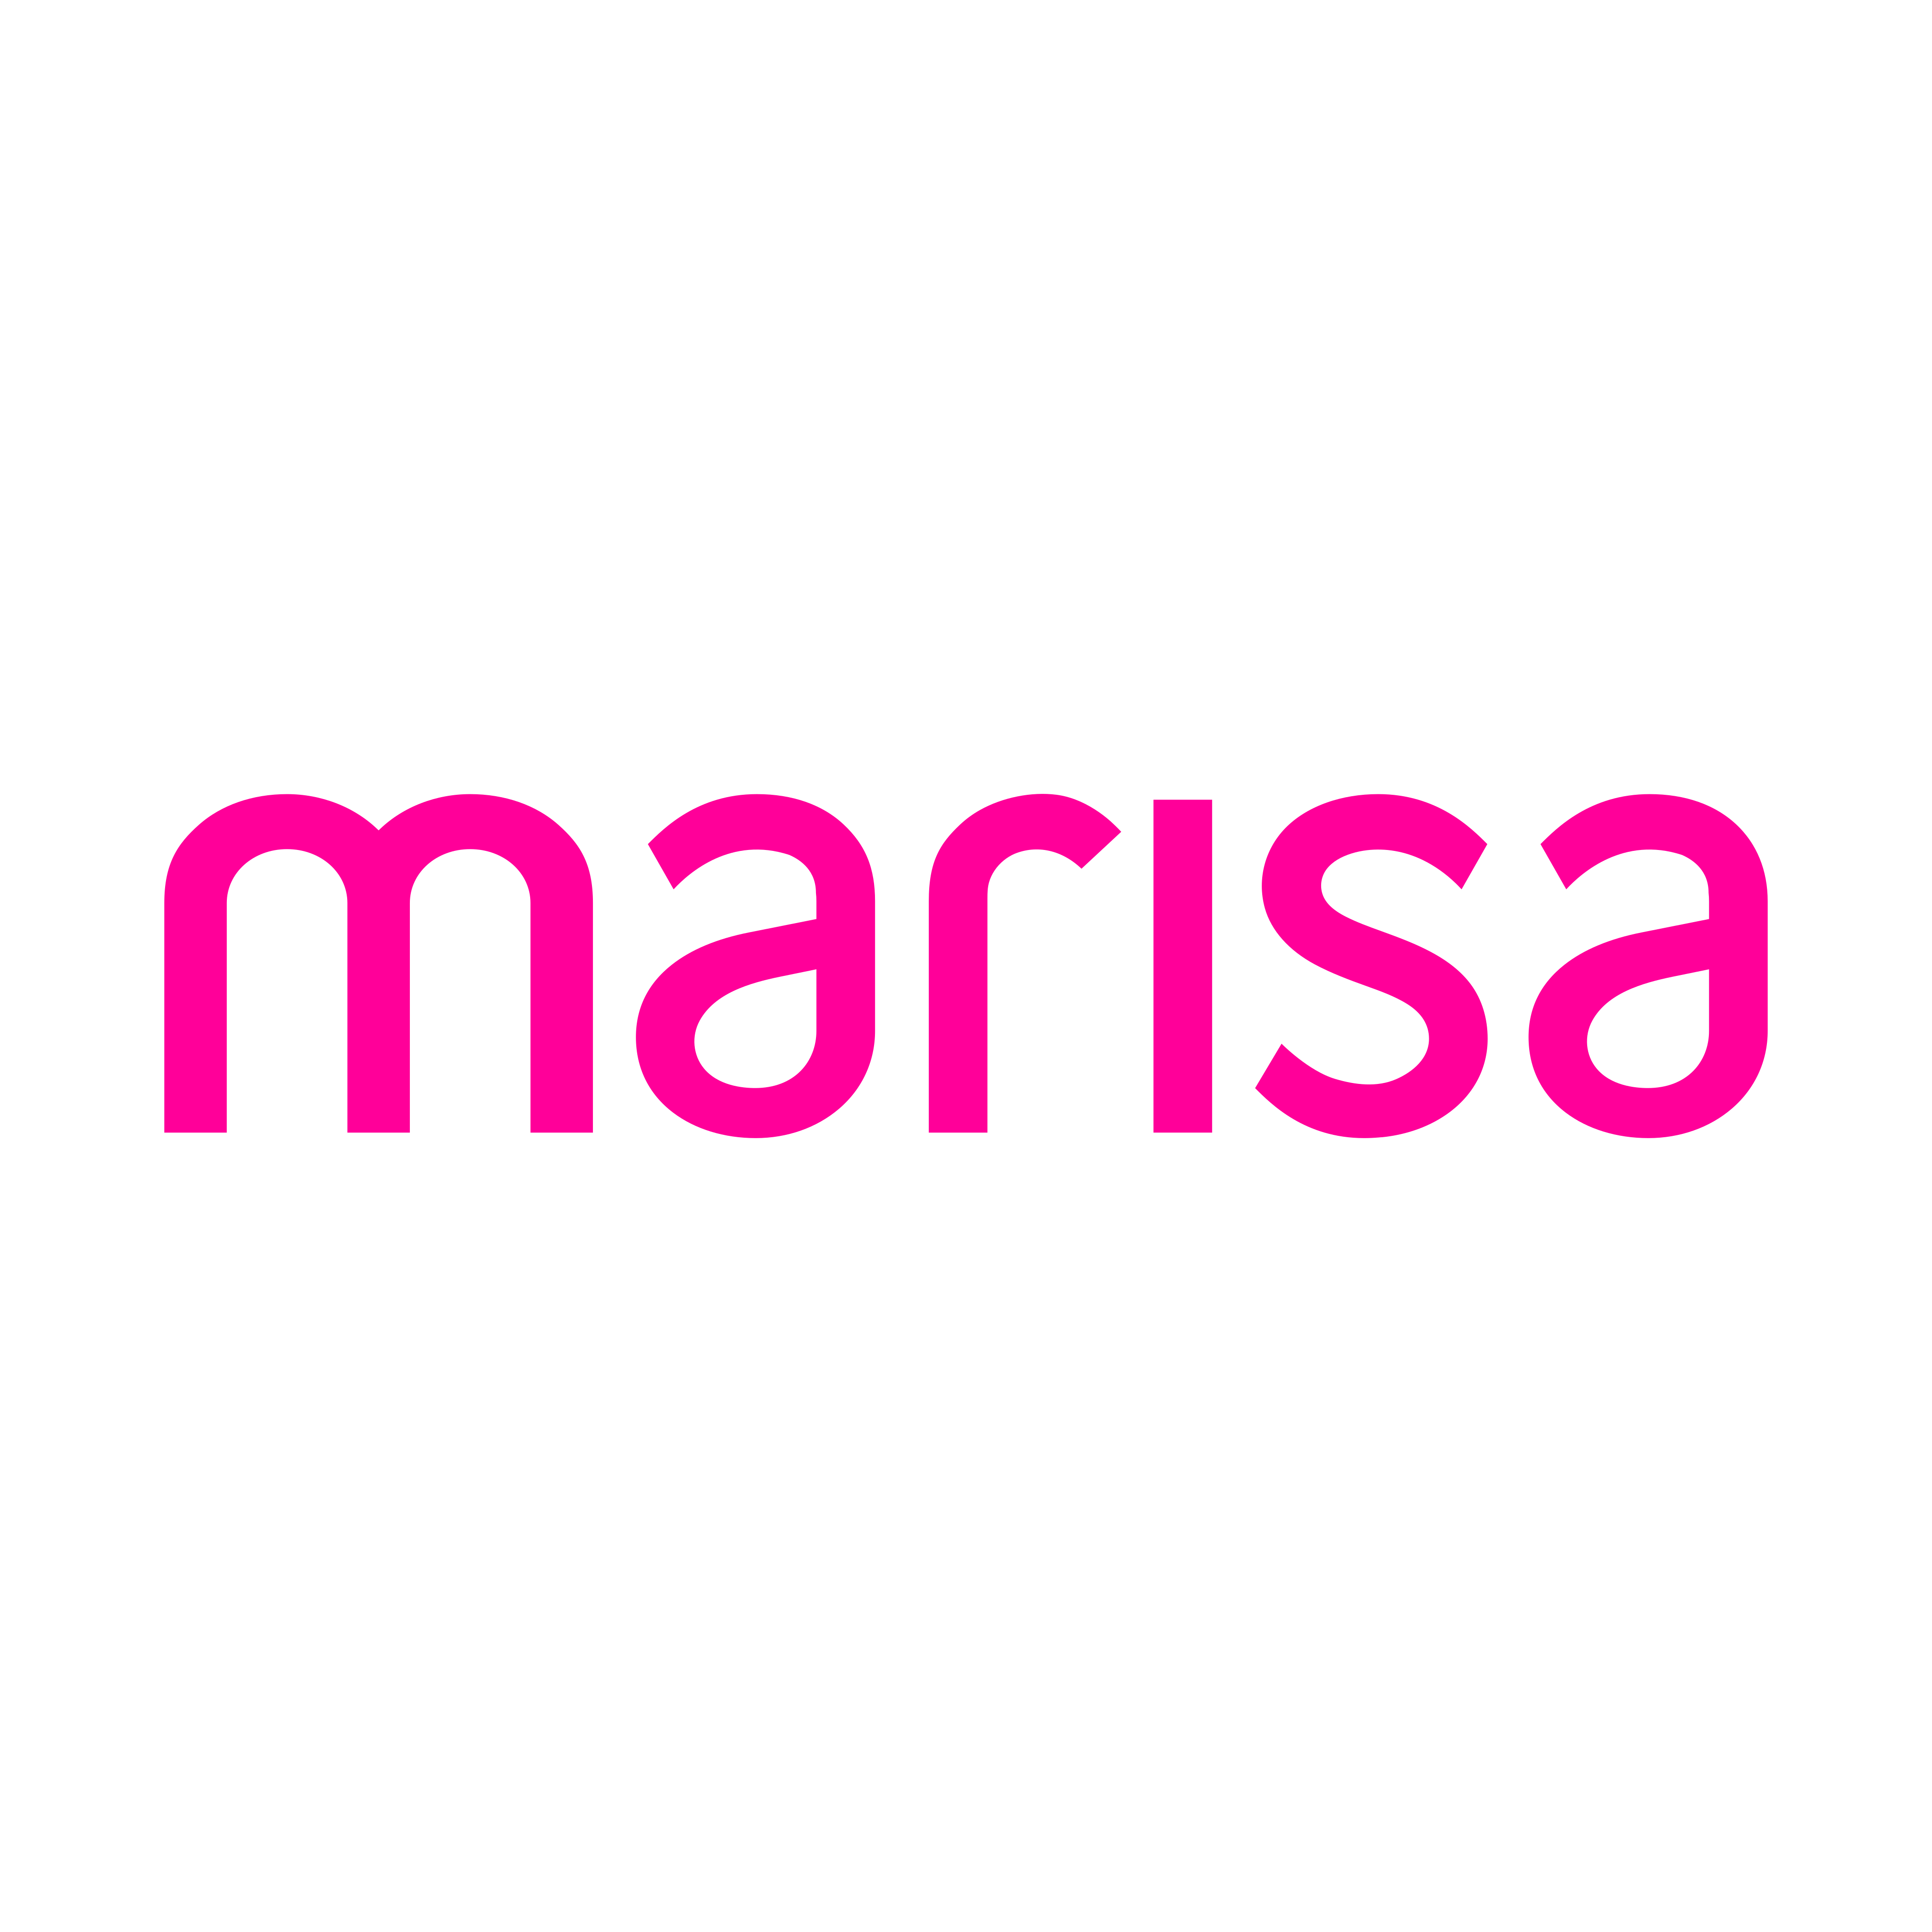 Marisa Logo PNG.